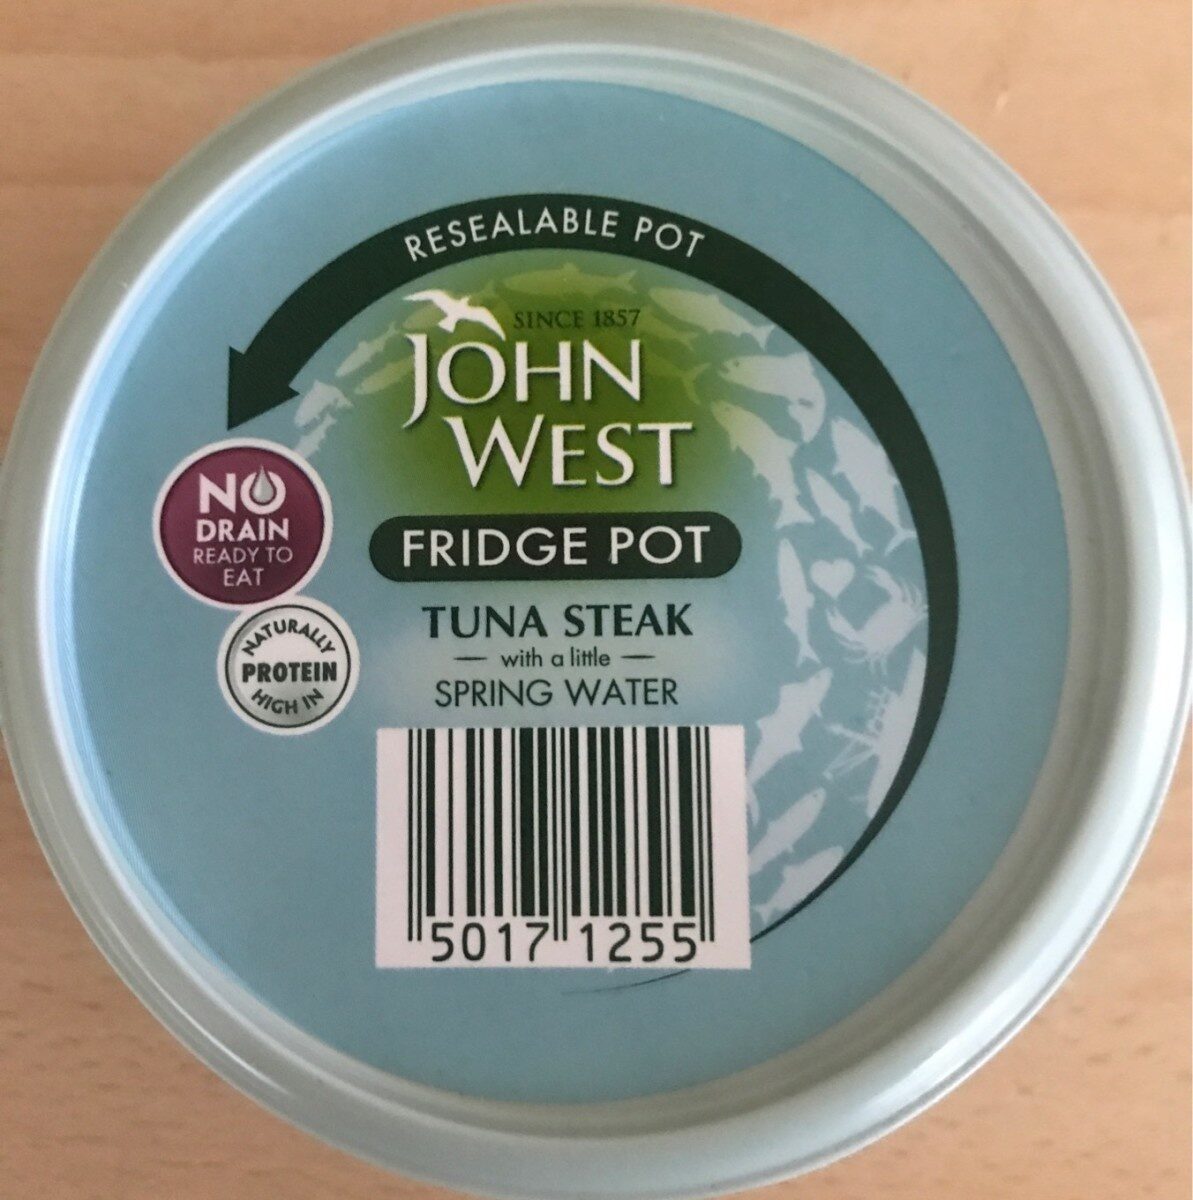 Fridge Pot Tuna Steak - Product